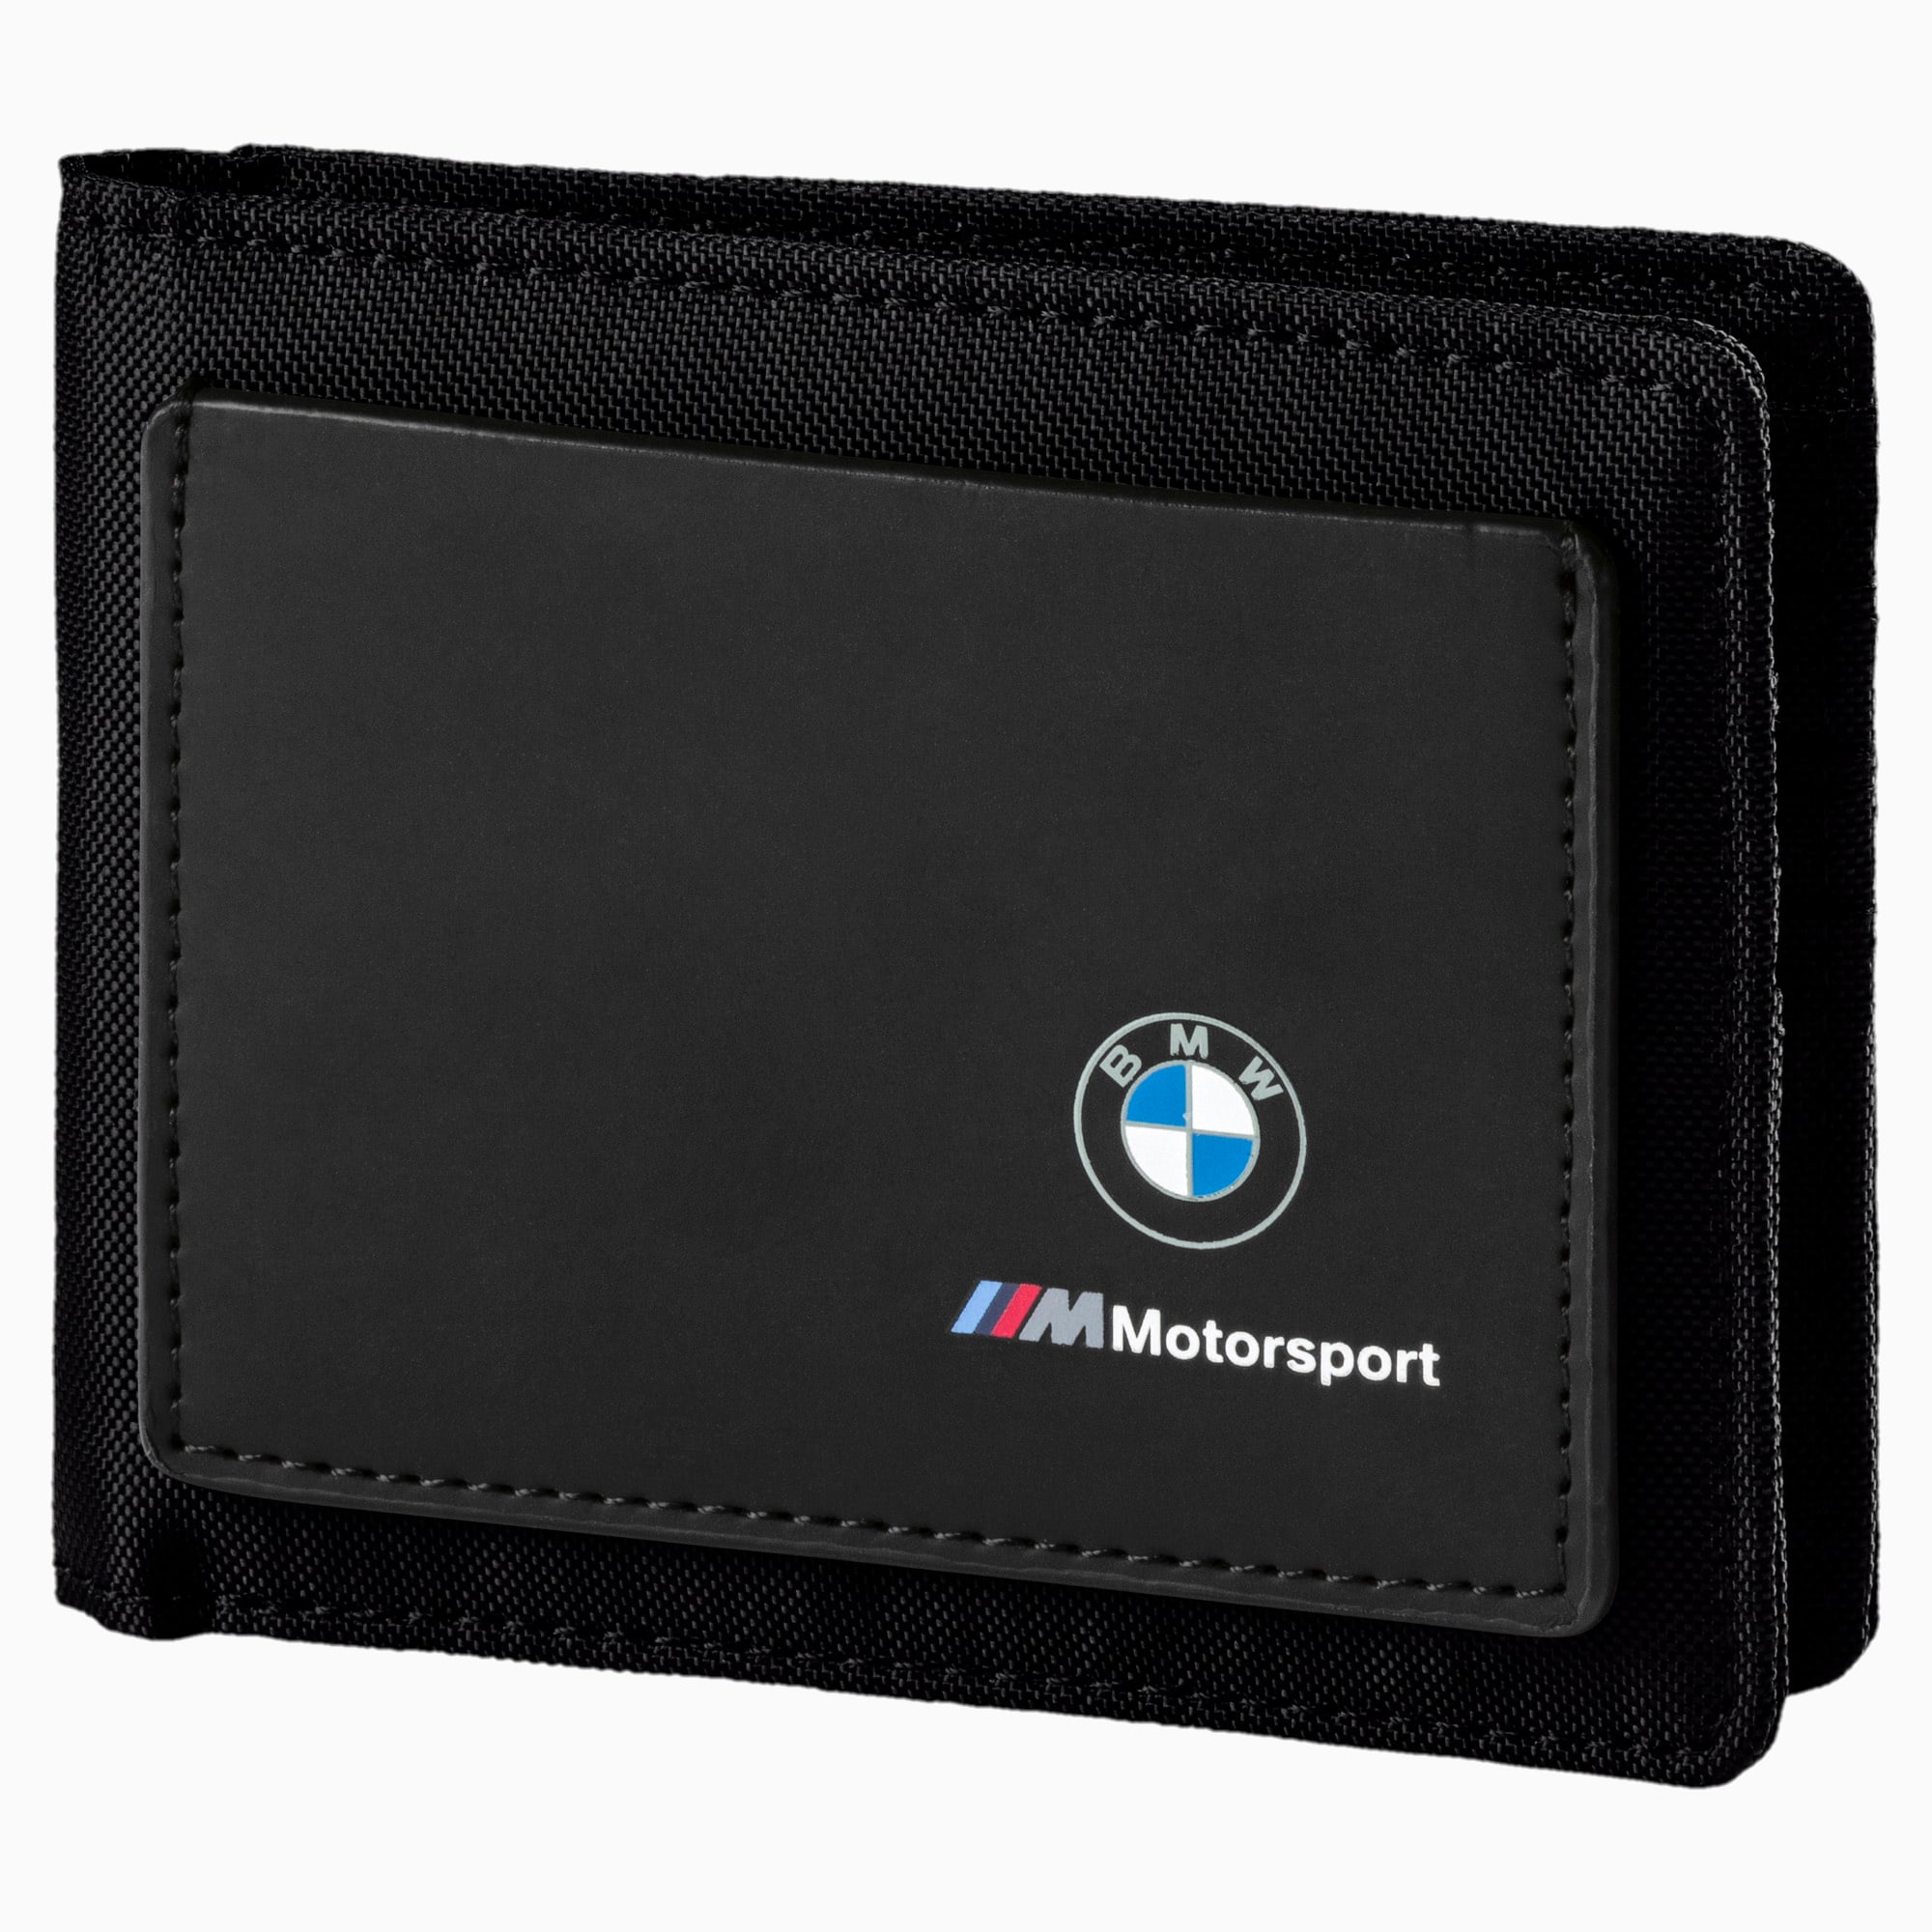 BMW M Motorsport Wallet | PUMA US